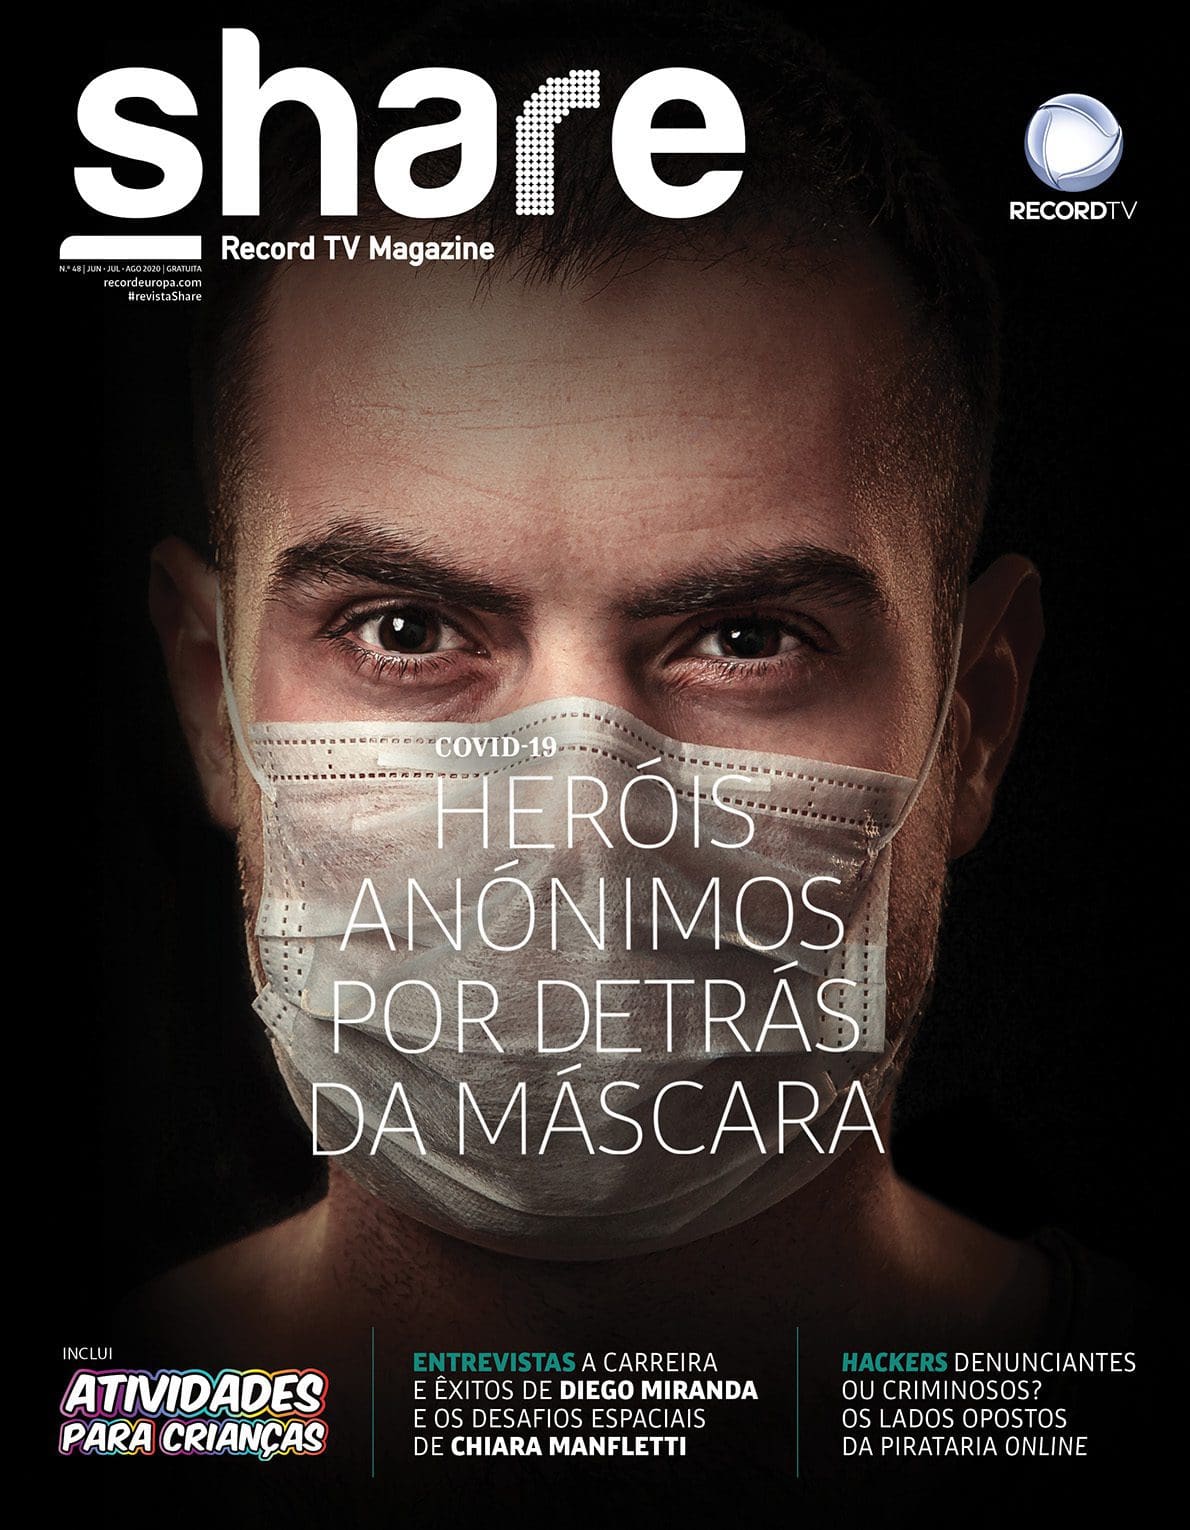 Share Magazine 48 - Heróis anónimos por detrás da máscara